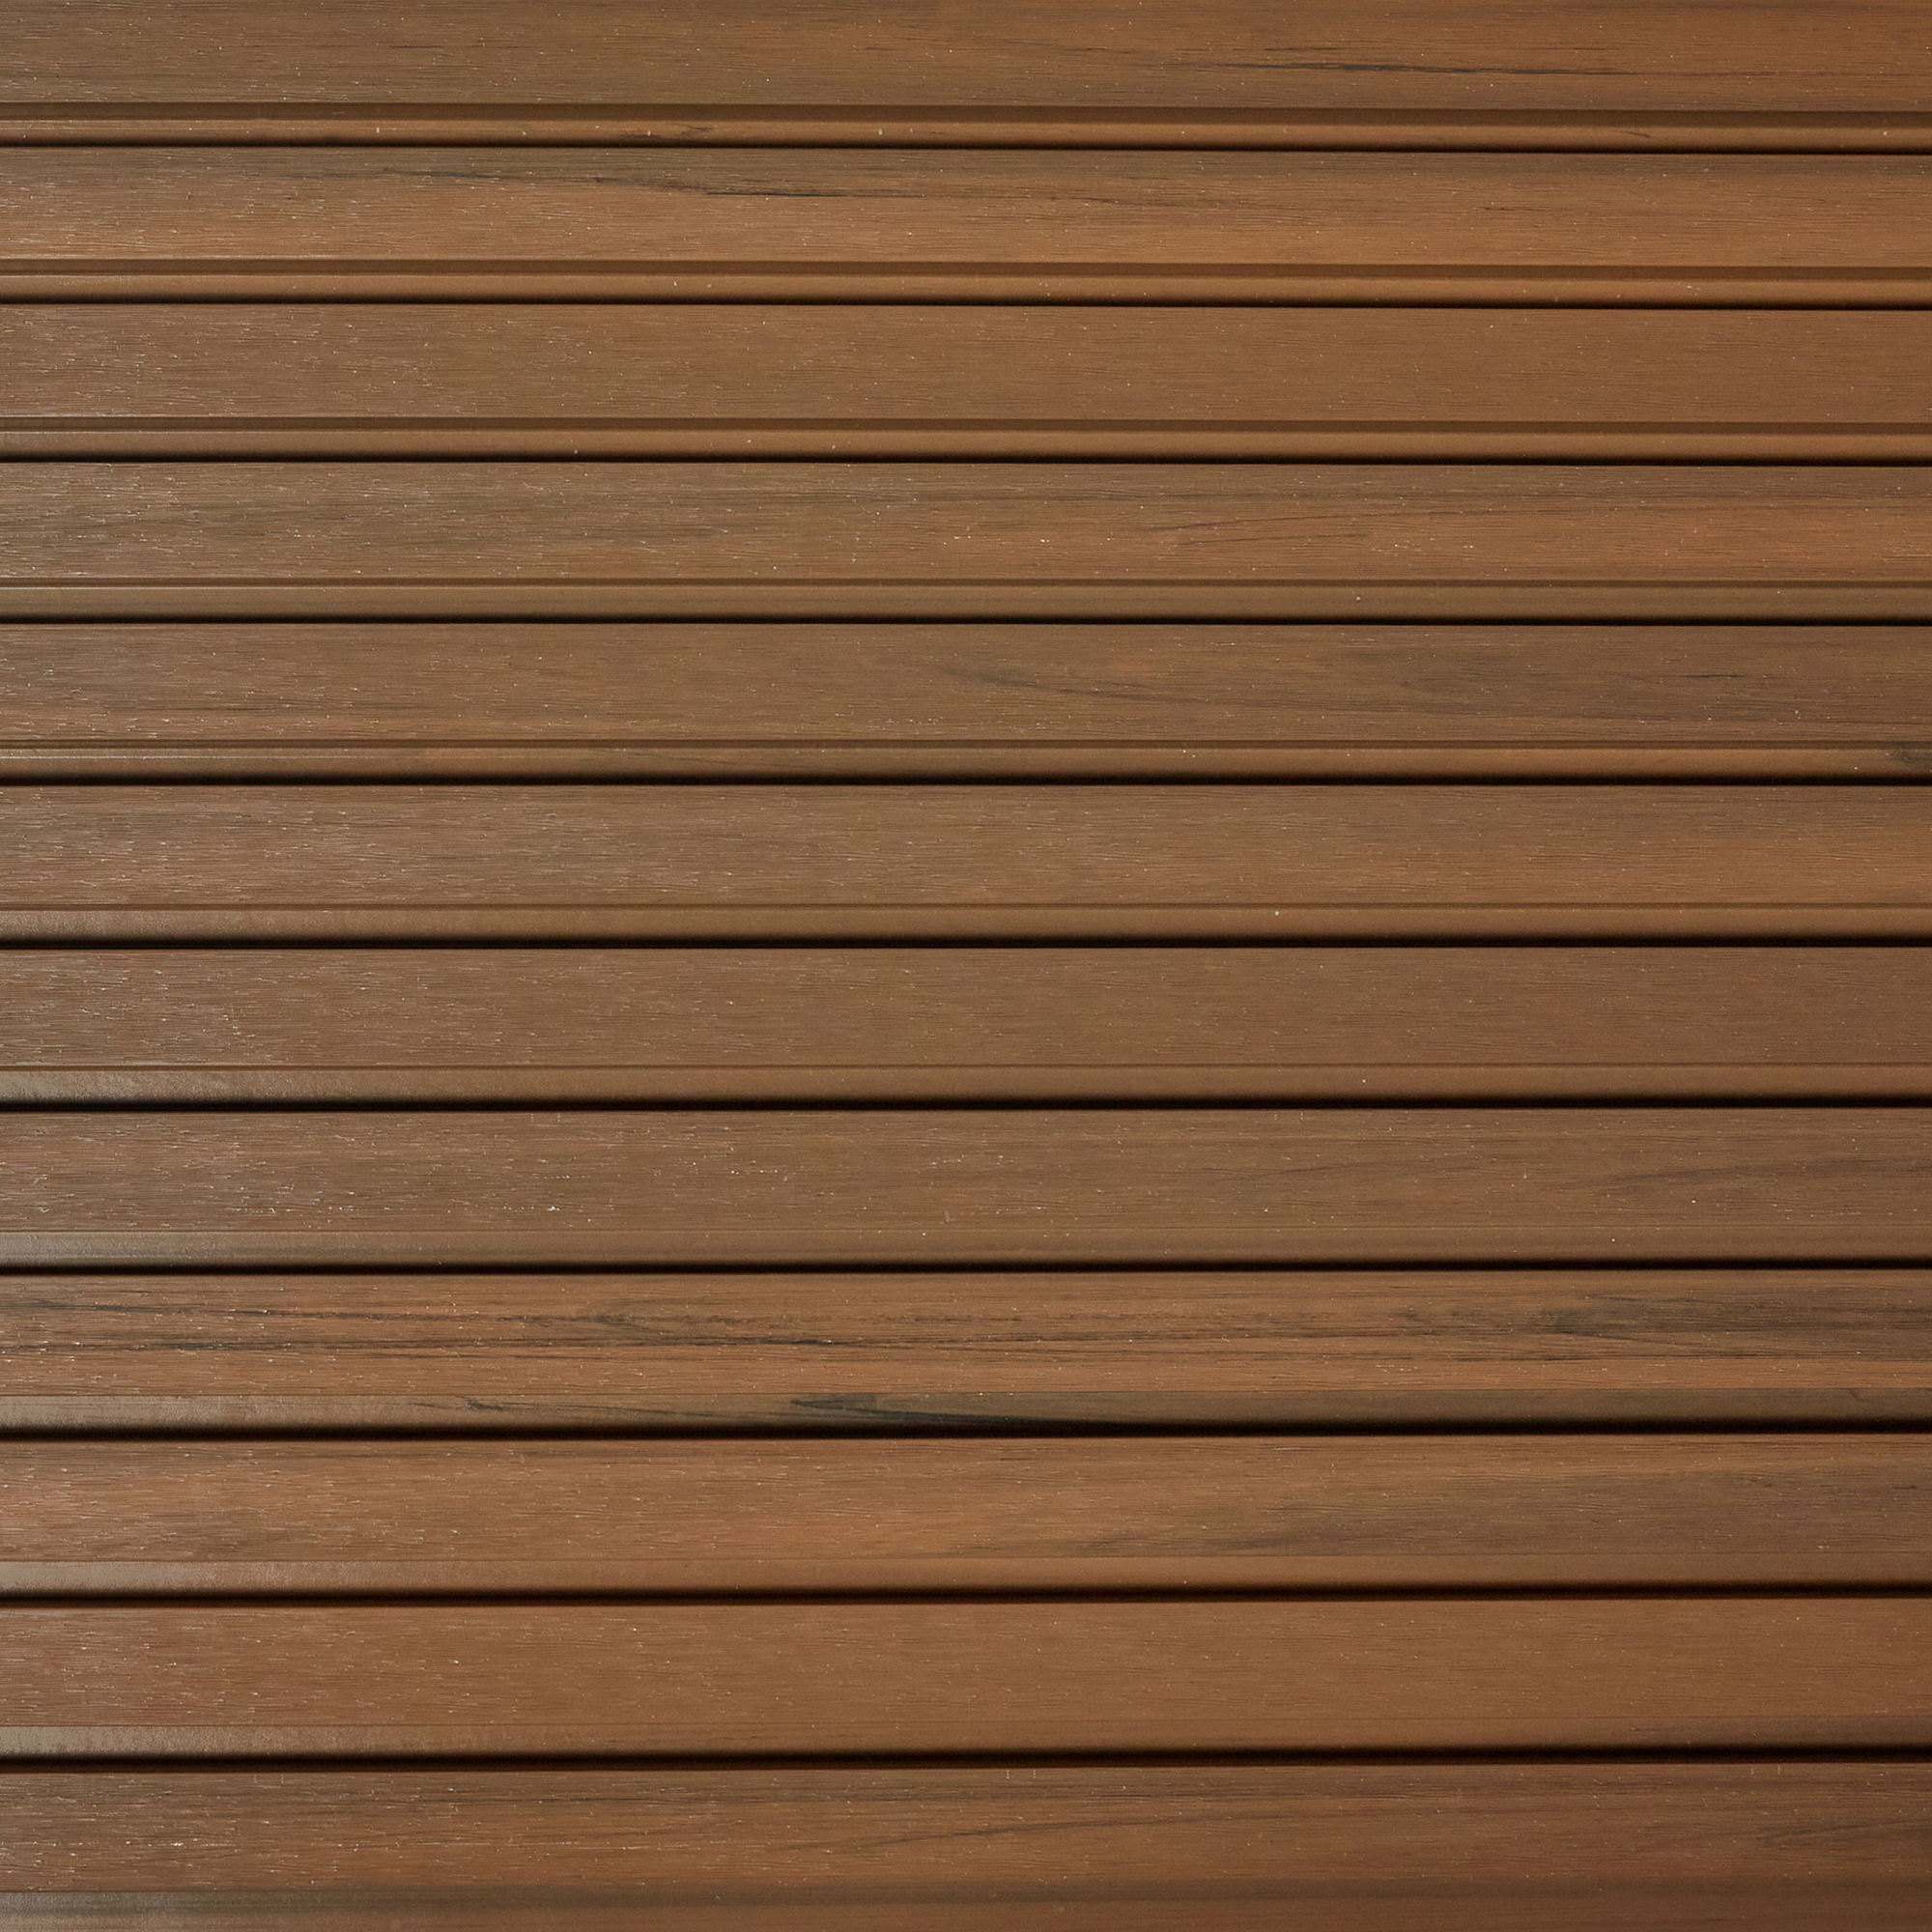 Стеновая панель CM Wall, 26x219x3000 мм, цвет TEAK (Тик)2